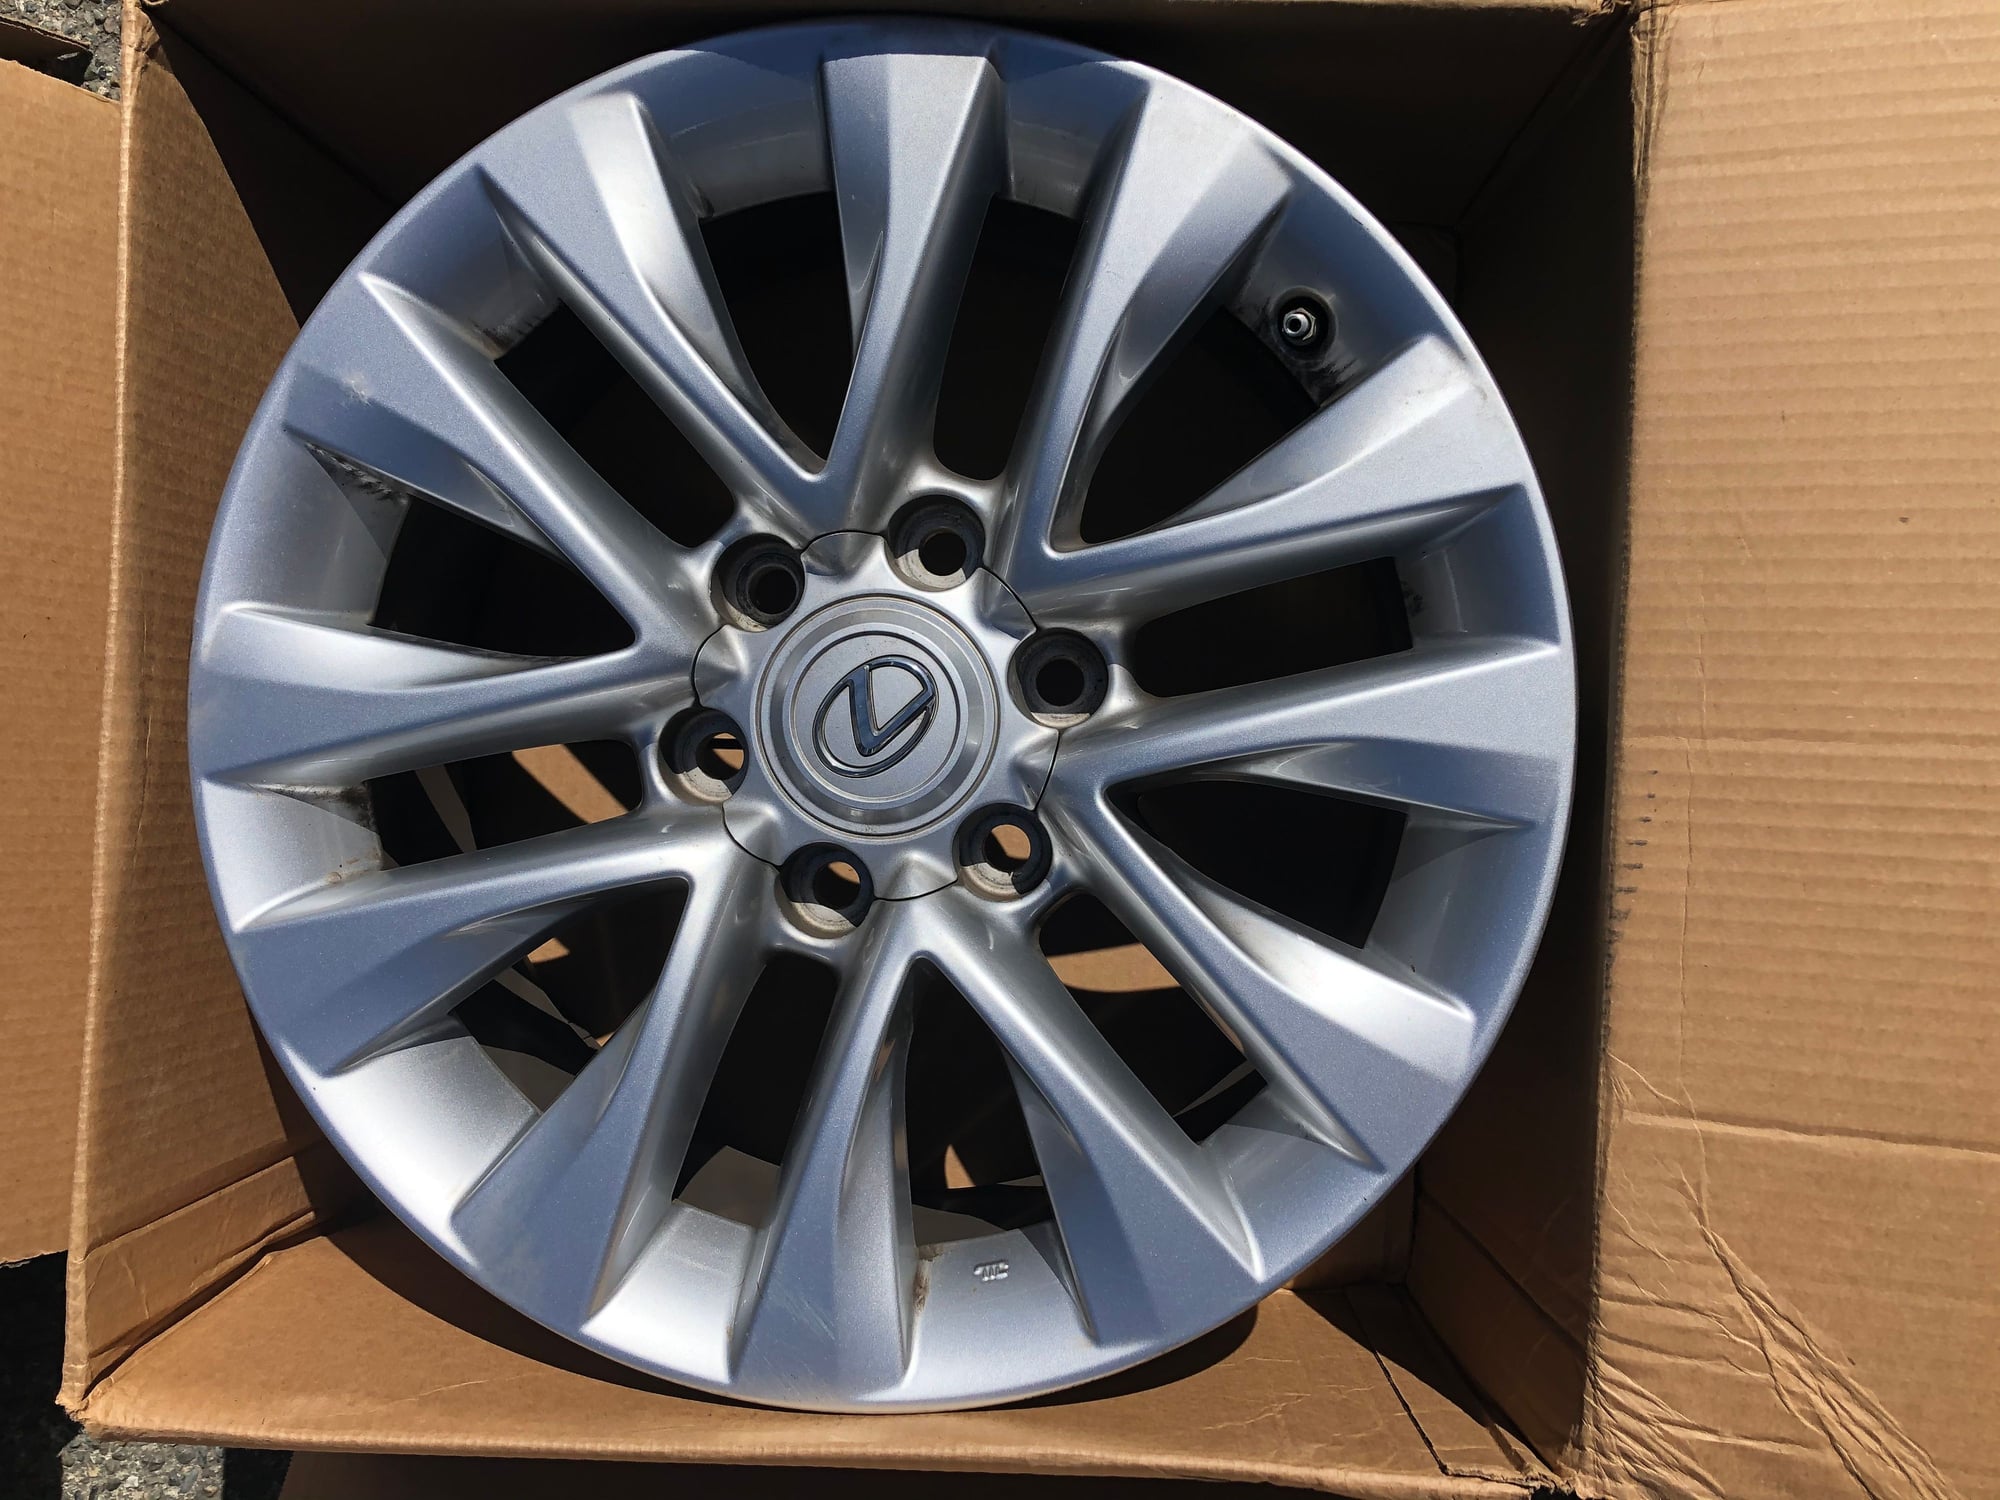 Wheels and Tires/Axles - GX460 OEM Premium 18” Wheels Silver $250 - Used - 2014 to 2021 Lexus GX - Renton, WA 98055, United States